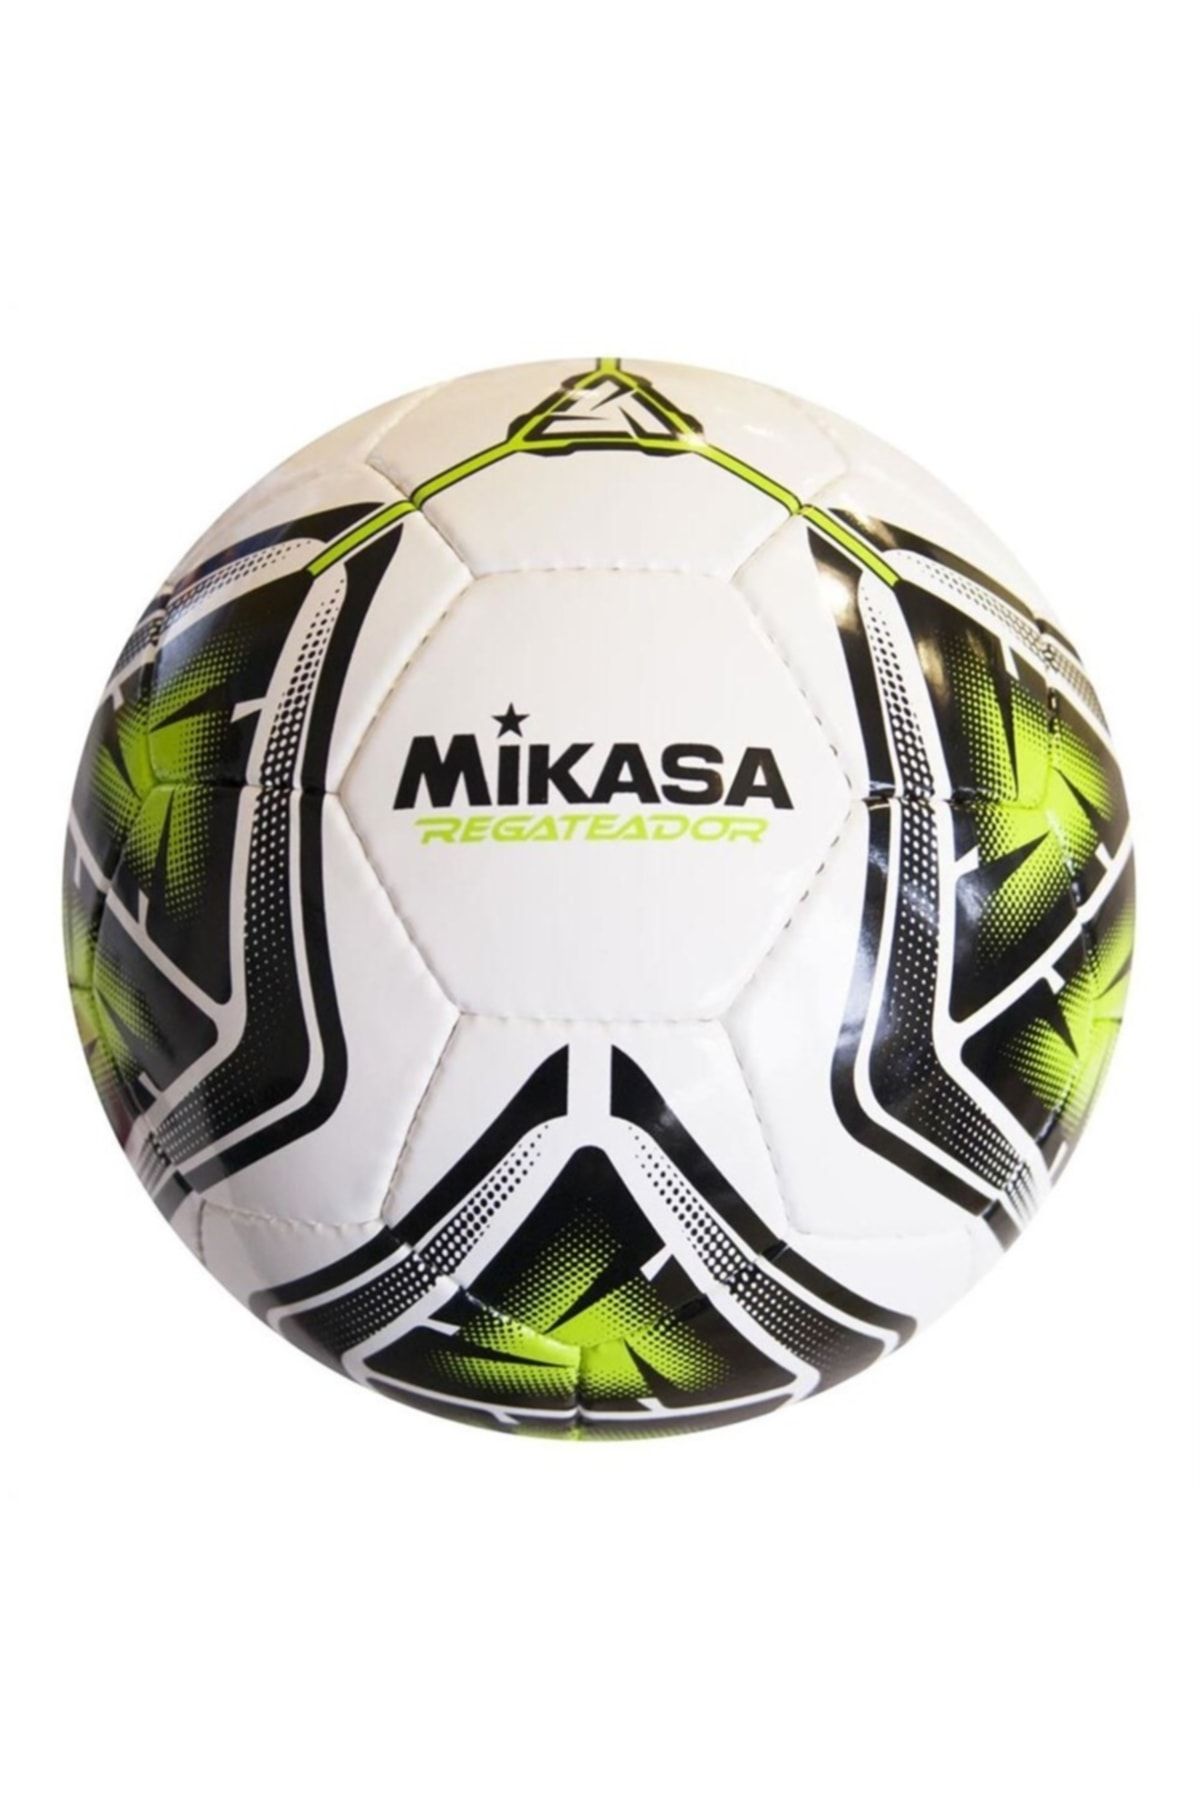 MIKASA Futbol Topu Regateador5-g Beyaz-yeşil